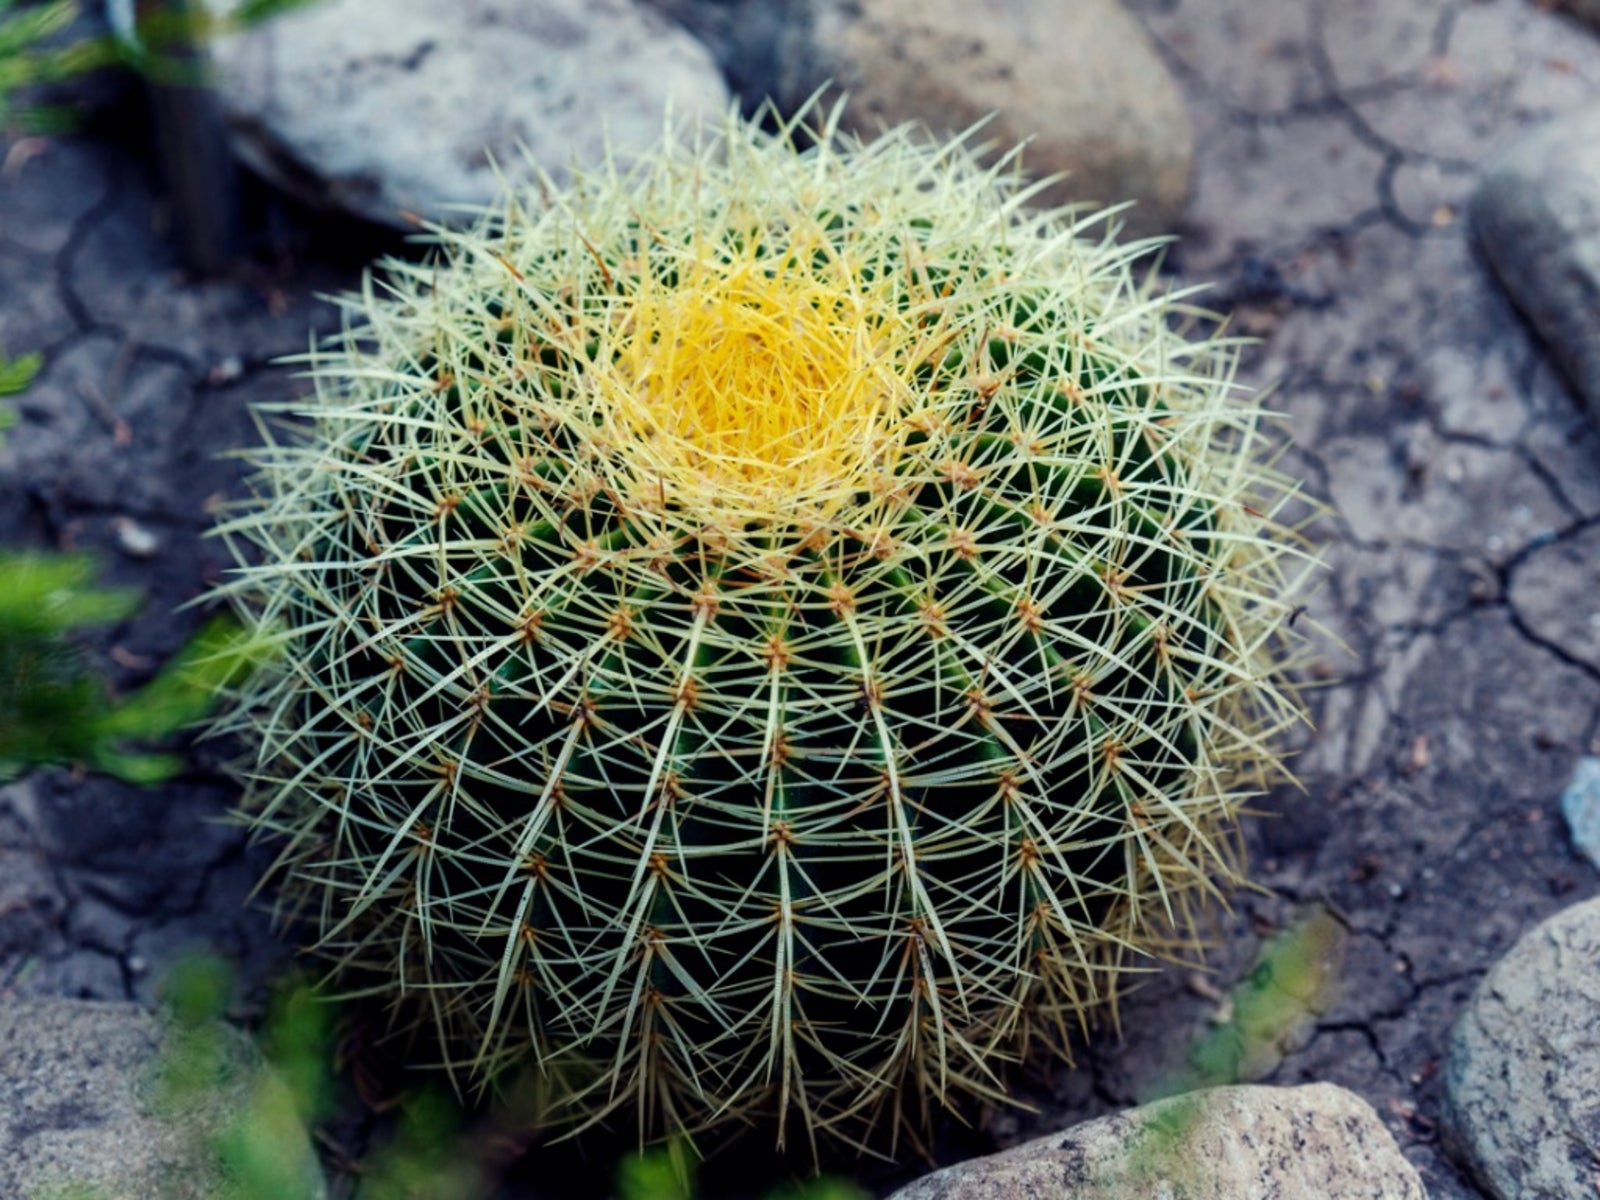 Growing Barrel Cactus Tips For Barrel Cactus Care